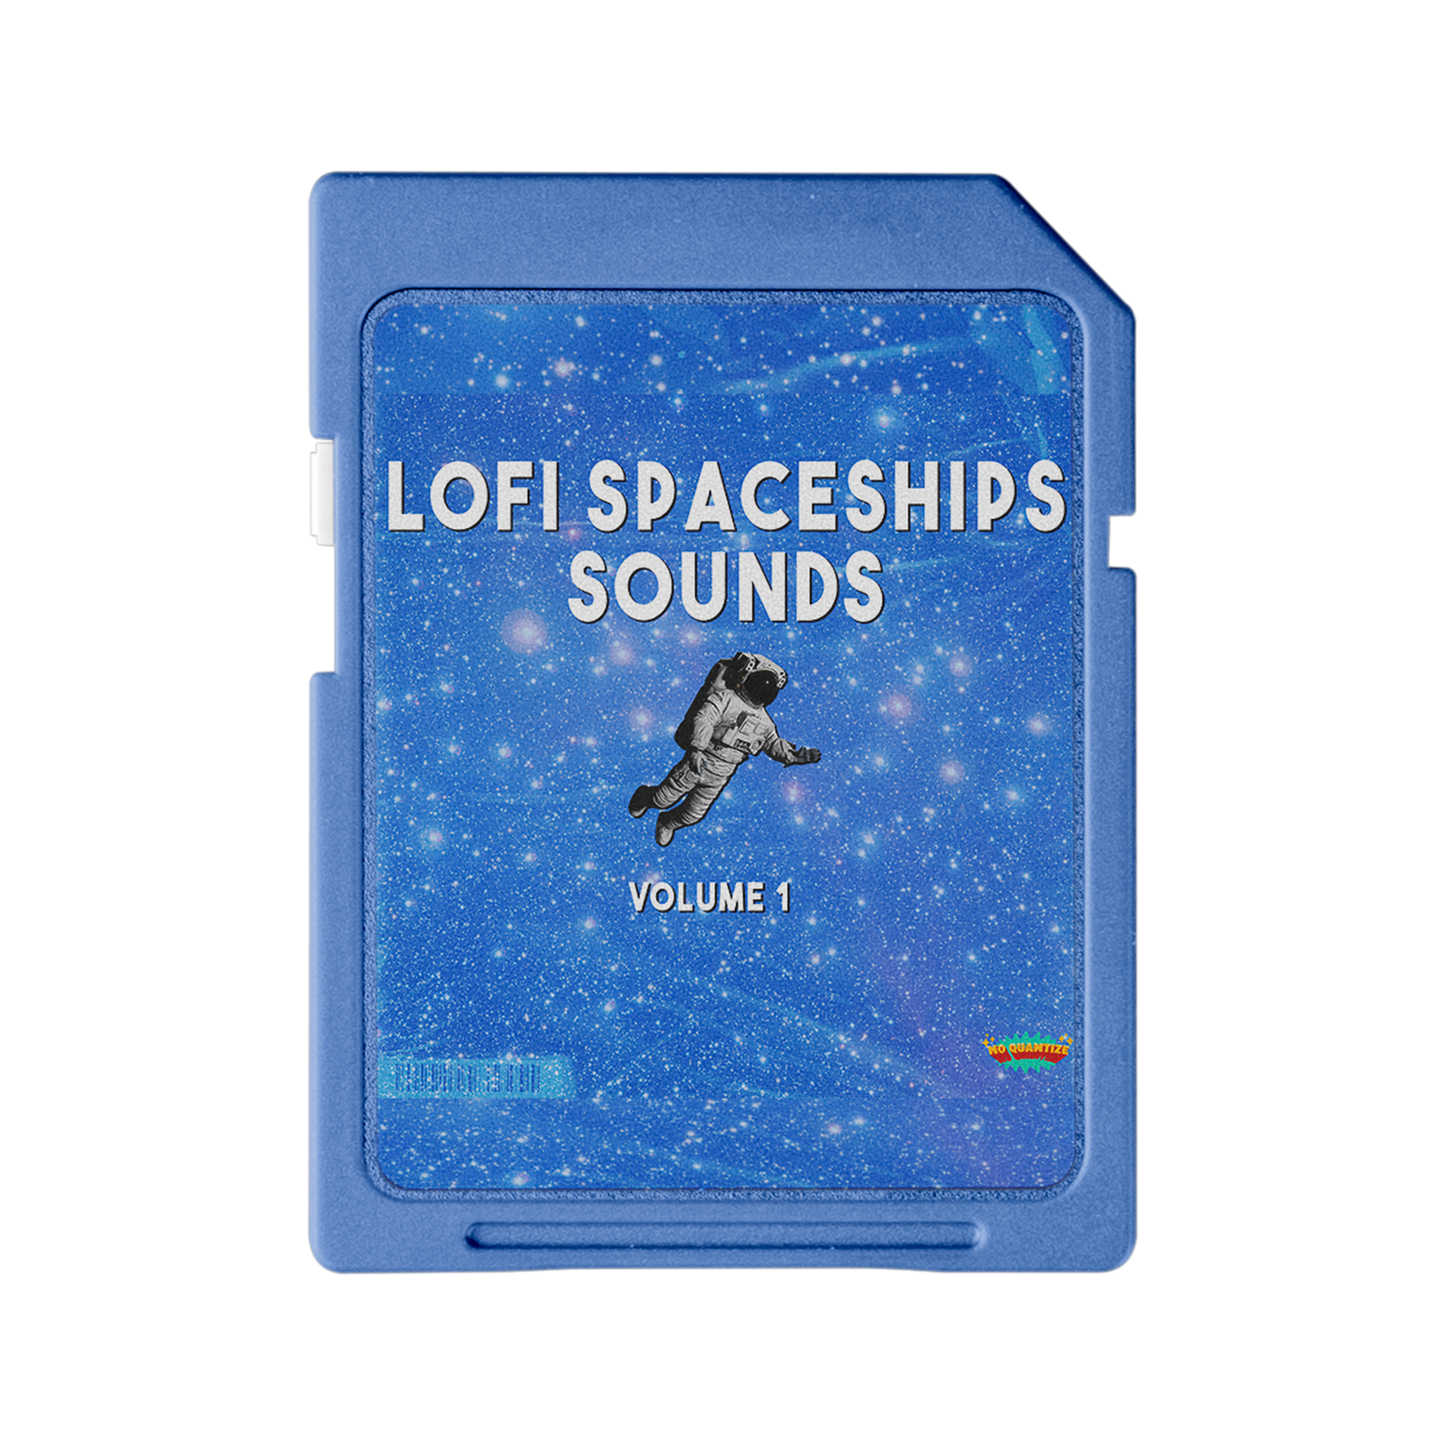 Lo-fi Spaceship Sounds Volume 1 |  100+ Sounds in WAV format (MPC, Maschine, Ableton, FL Studio, Sp-404, Reason, Logic Pro)